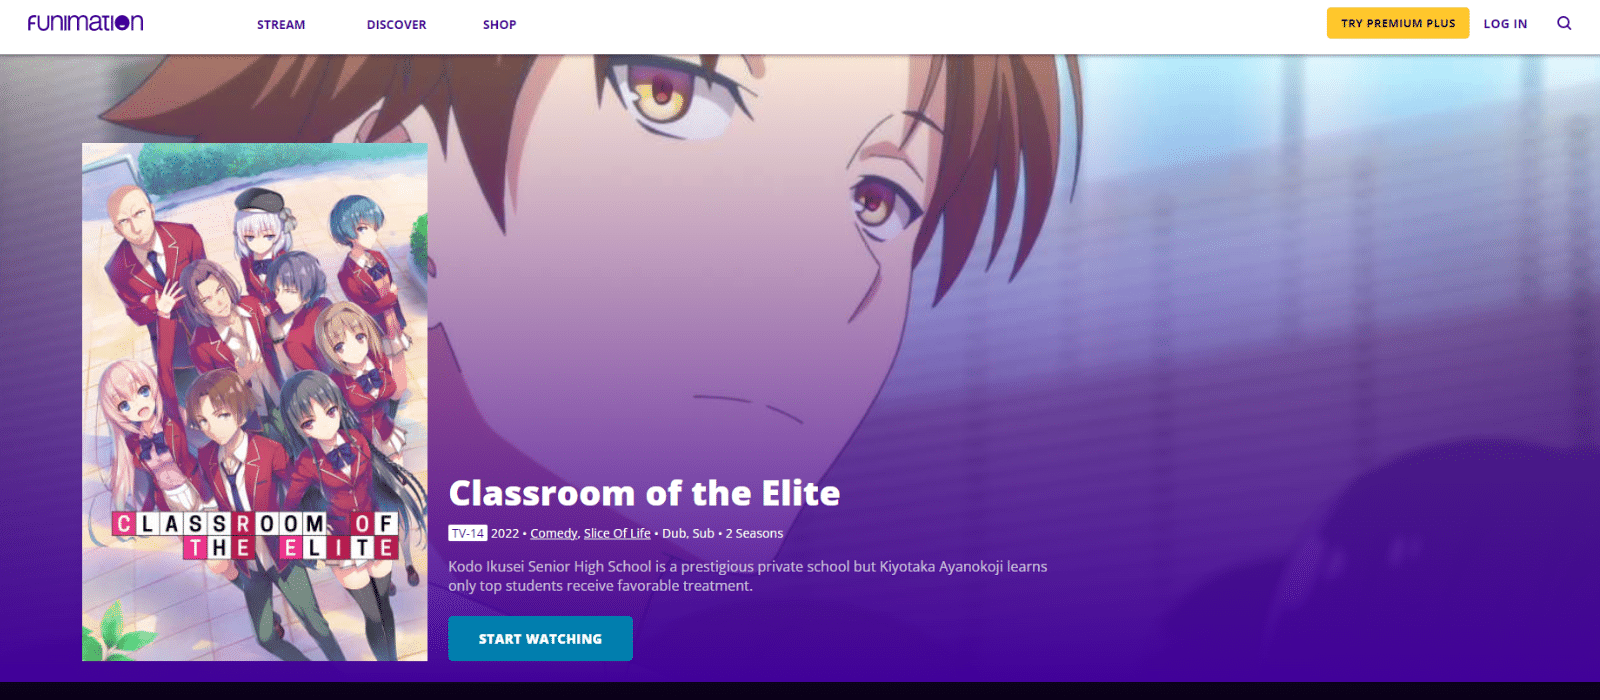 Classroom of the Elite Season 3: Classroom of the Elite Season 3 faces  delay, set to premiere in 2024 - The Economic Times